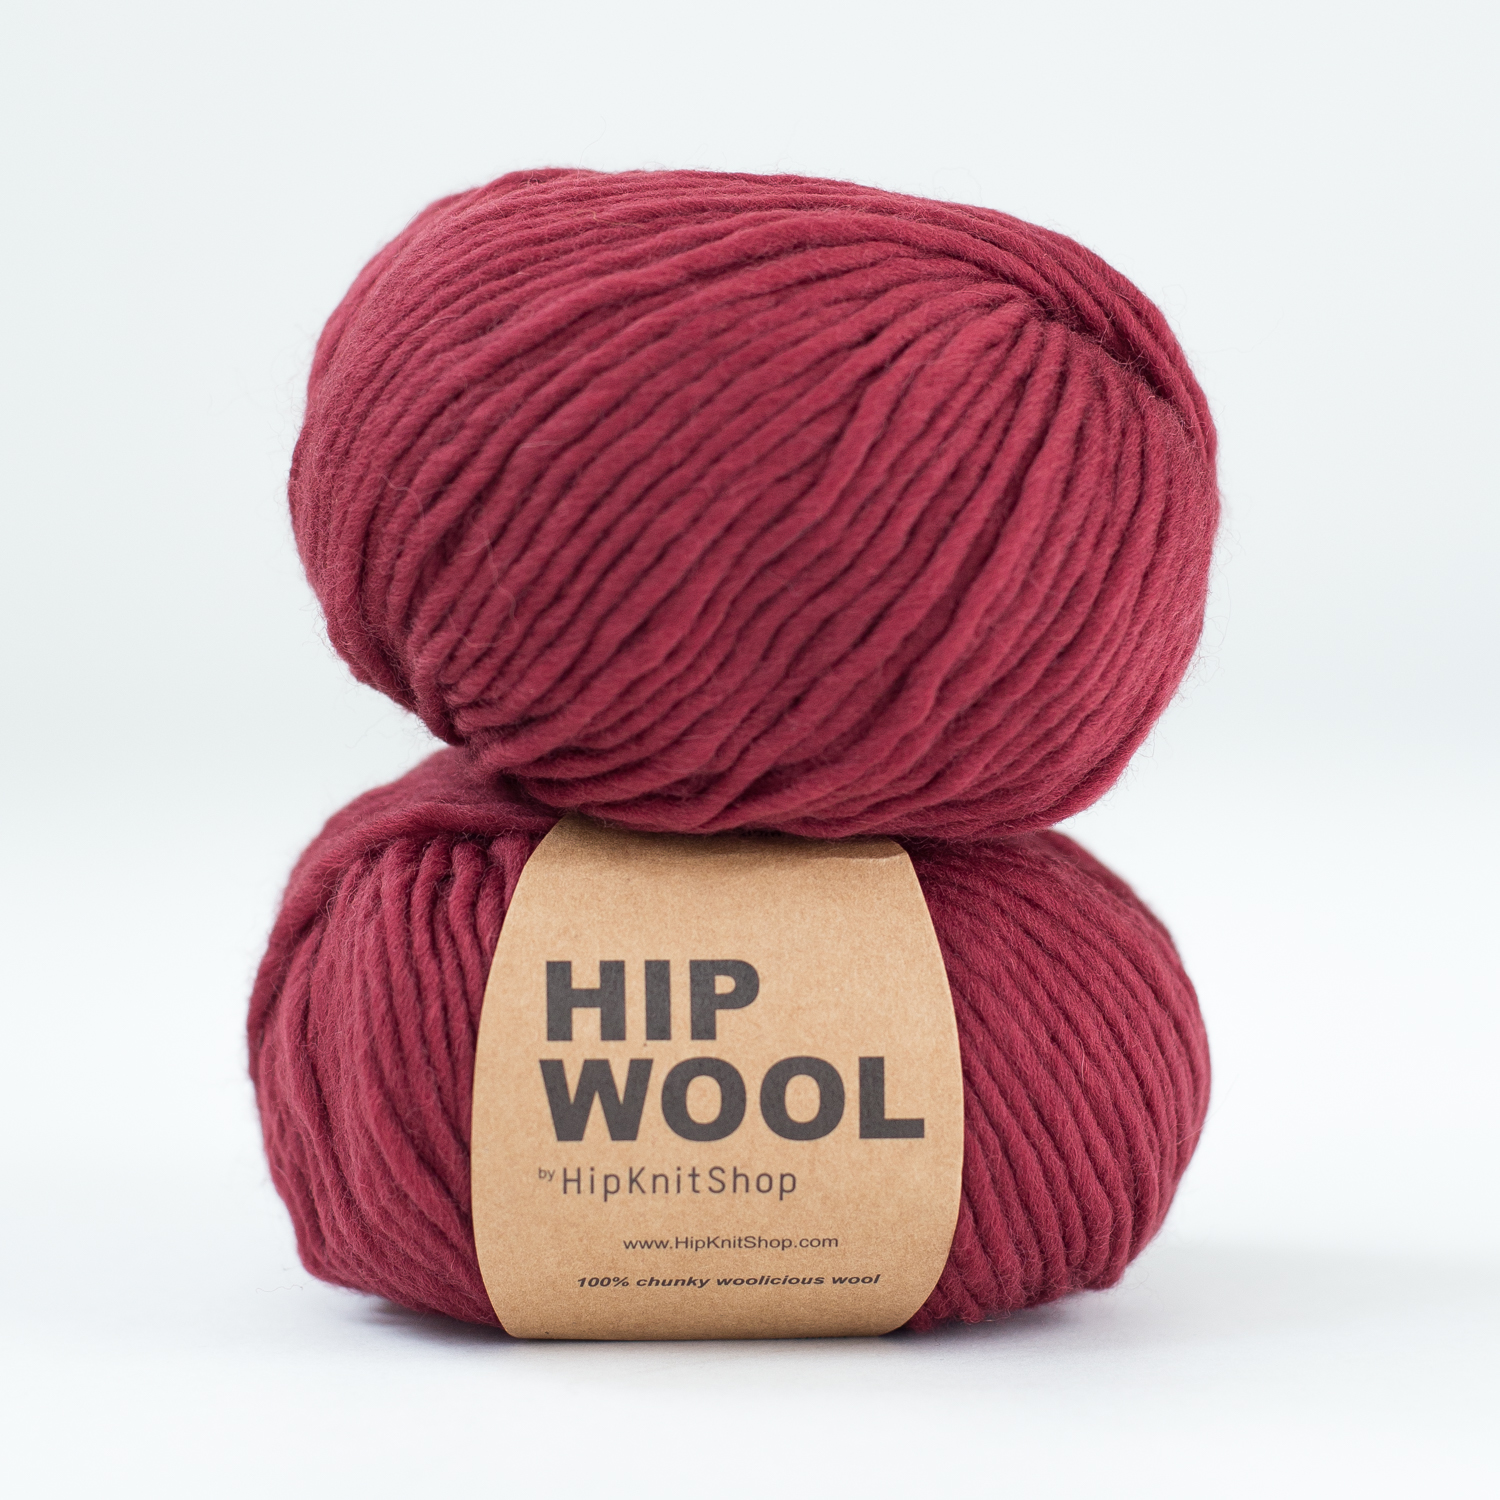 Hip Wool Merlot red yarn